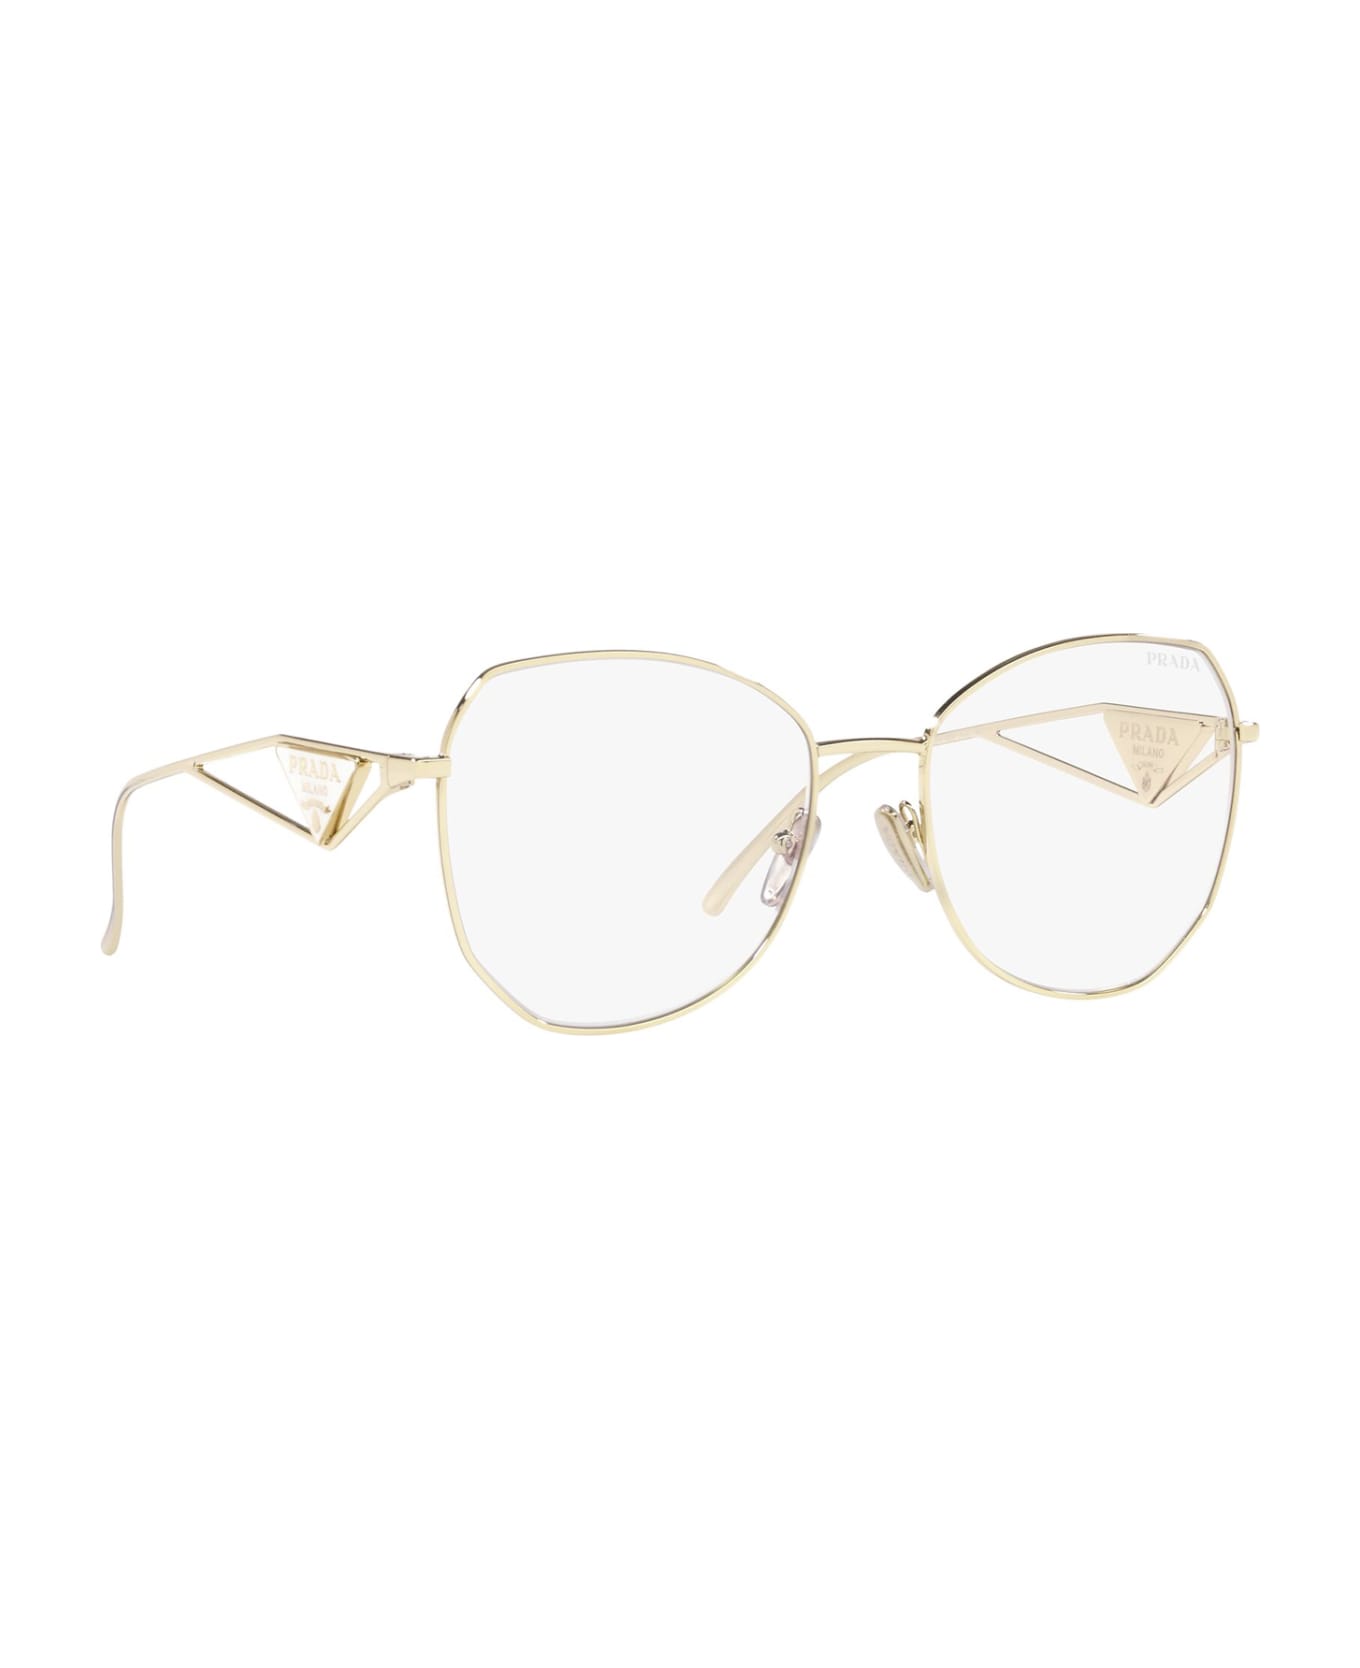 Prada Eyewear Pr 57ys Pale Gold Sunglasses - Pale Gold